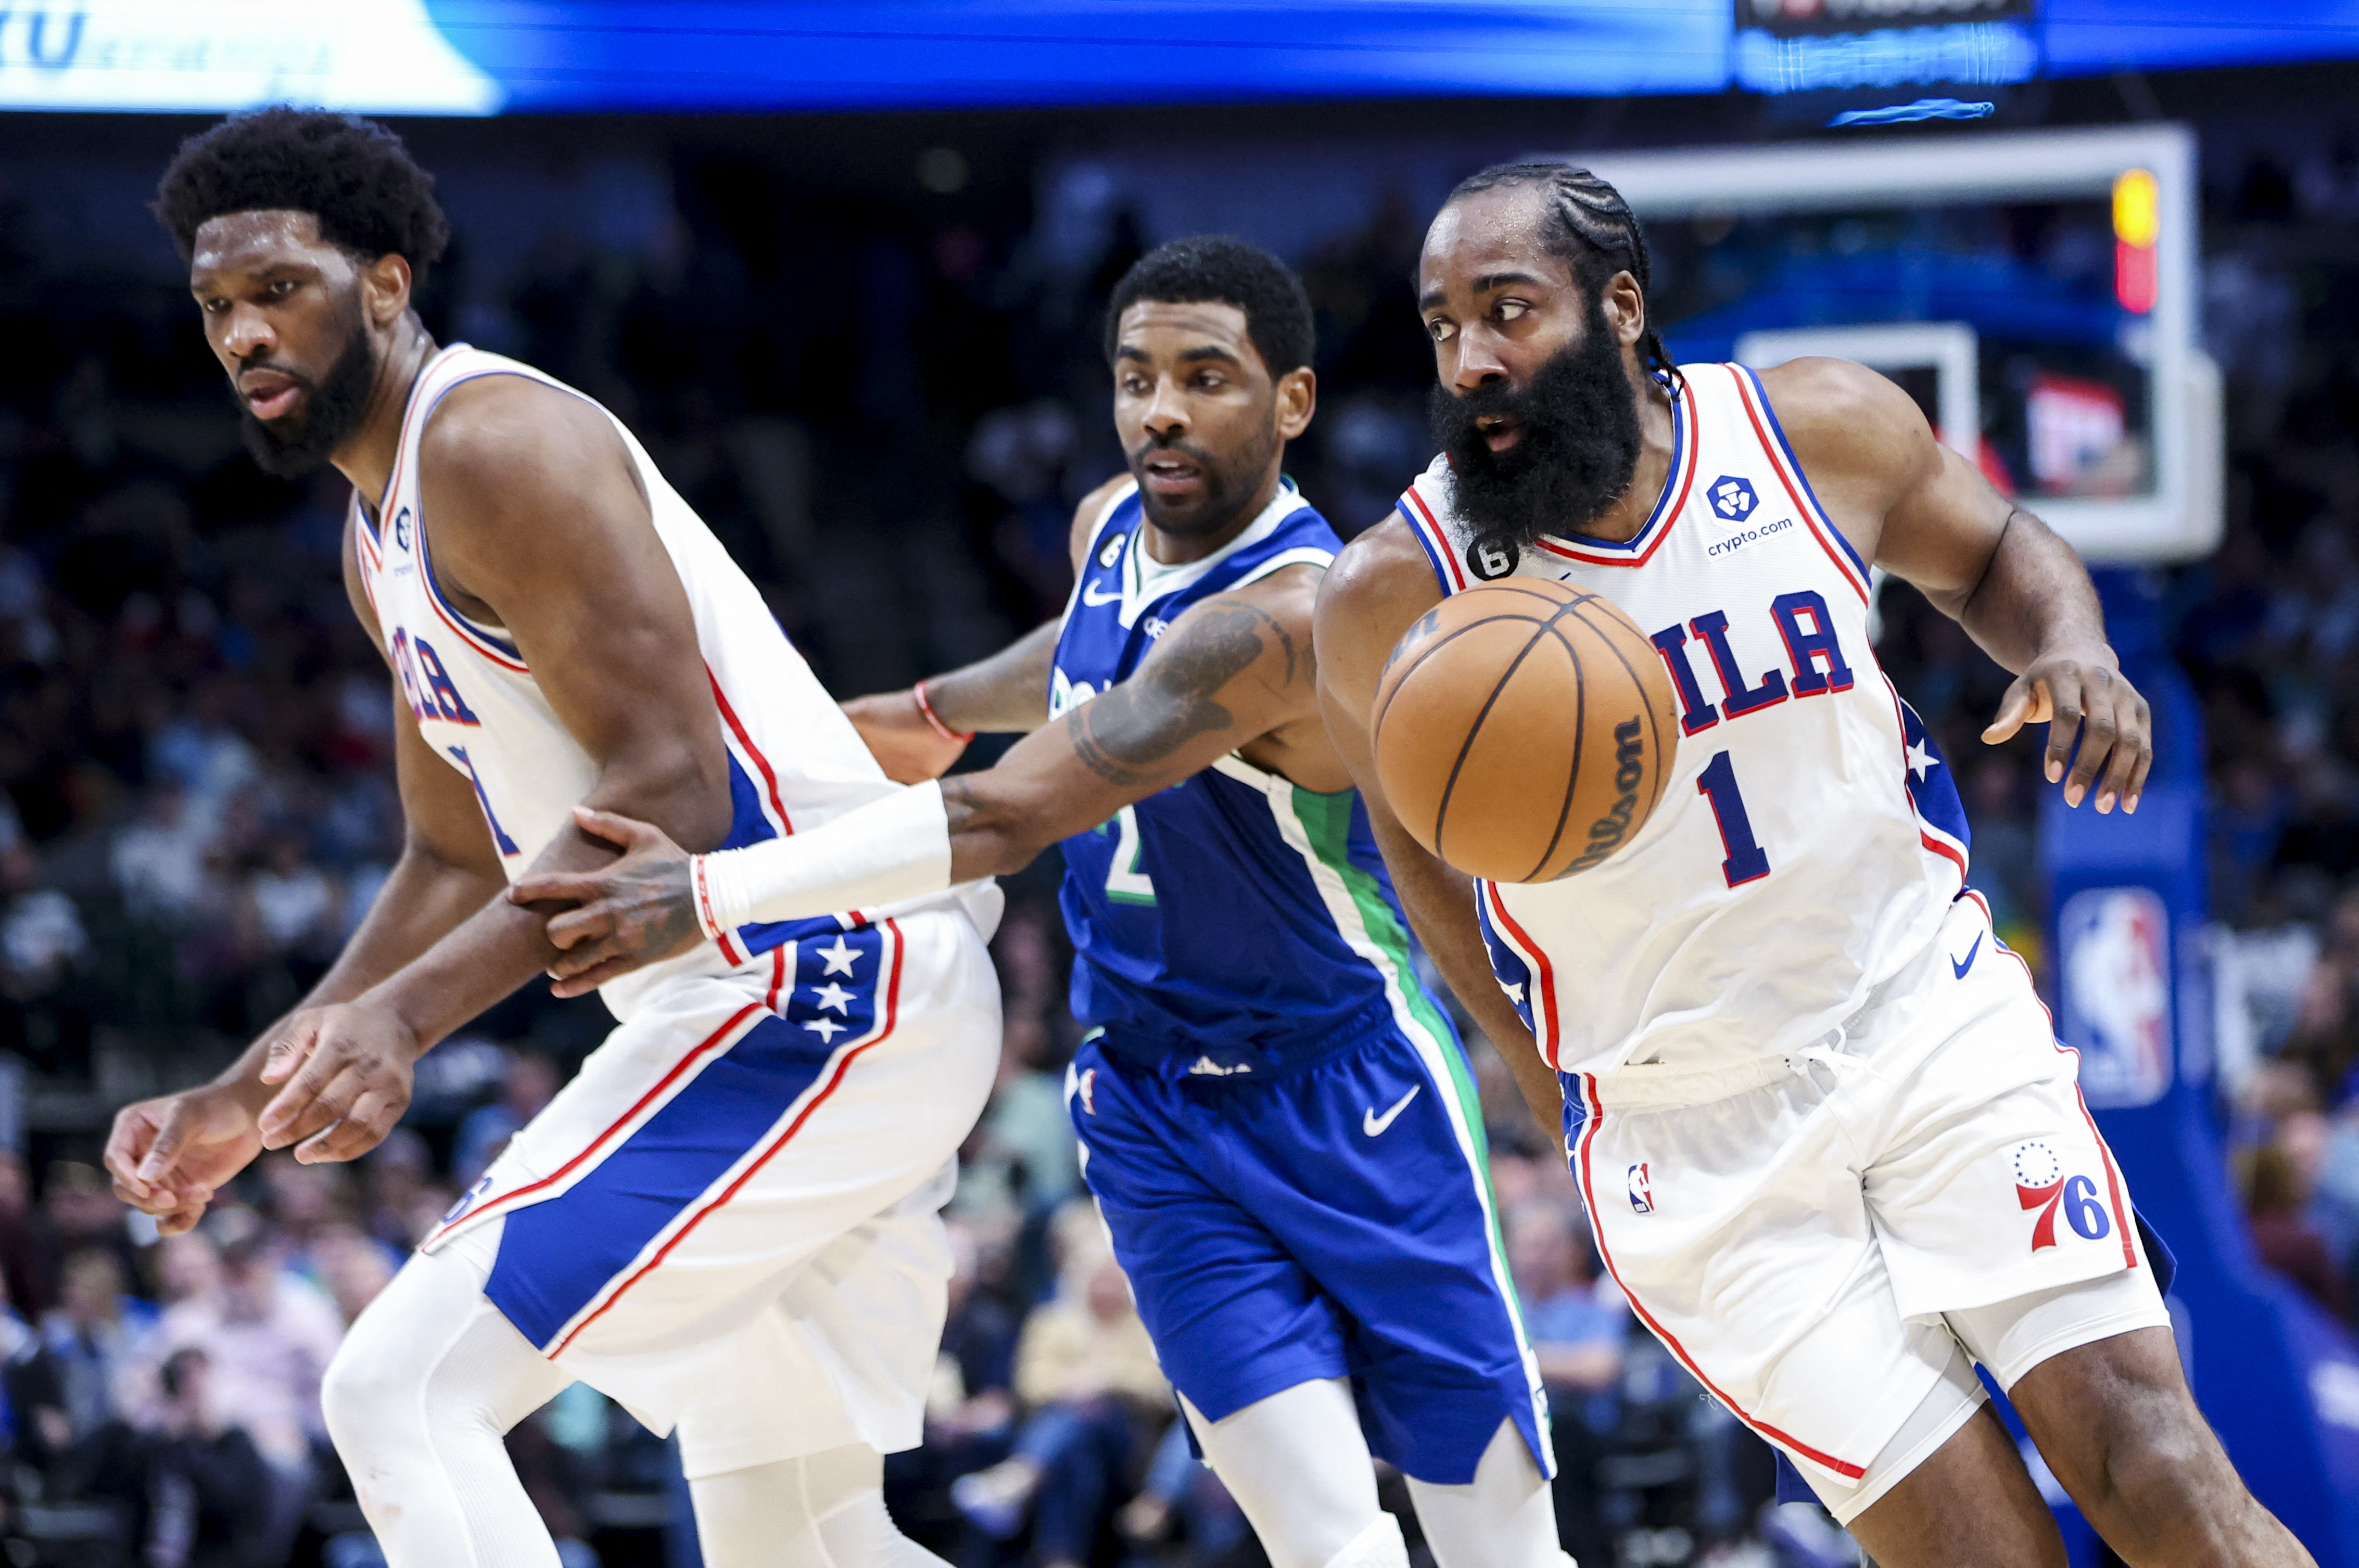 NBA roundup: Embiid, Harden lift 76ers past Knicks